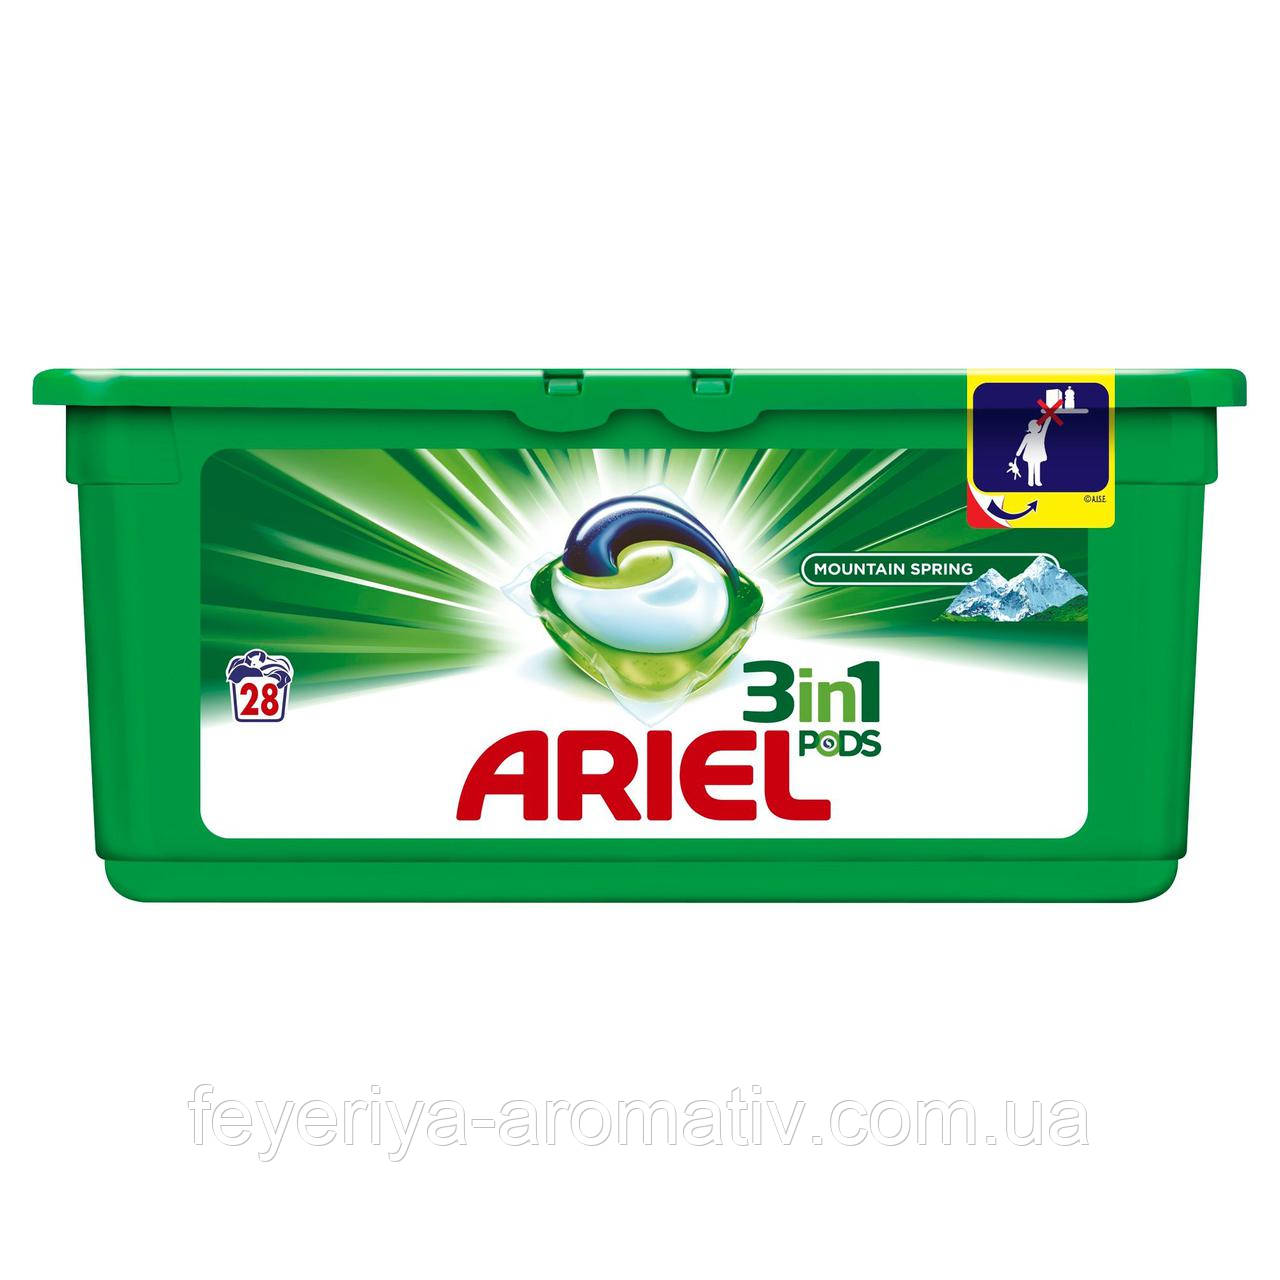 Капсули для прання Ariel 3in1 PODS Spring Mountain 28 шт., фото 1